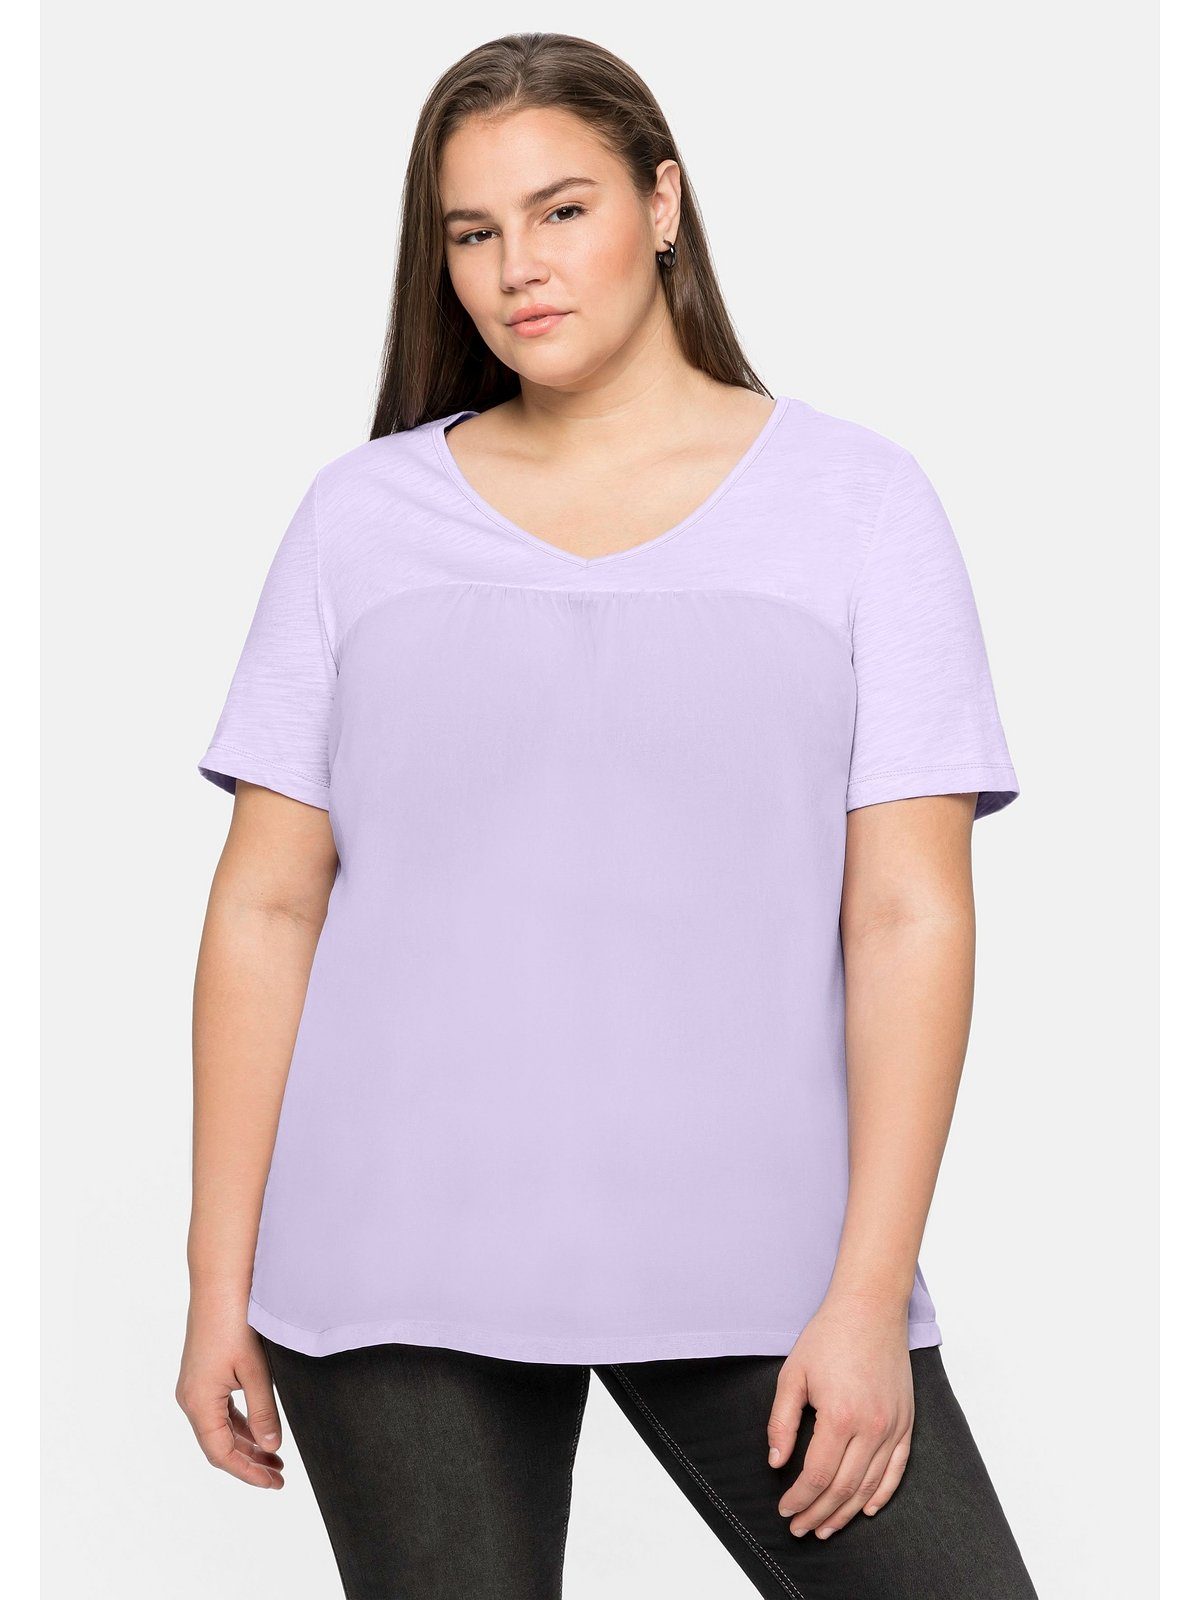 Sheego T-Shirt Große Größen im Materialmix, in A-Linie lavendel | V-Shirts